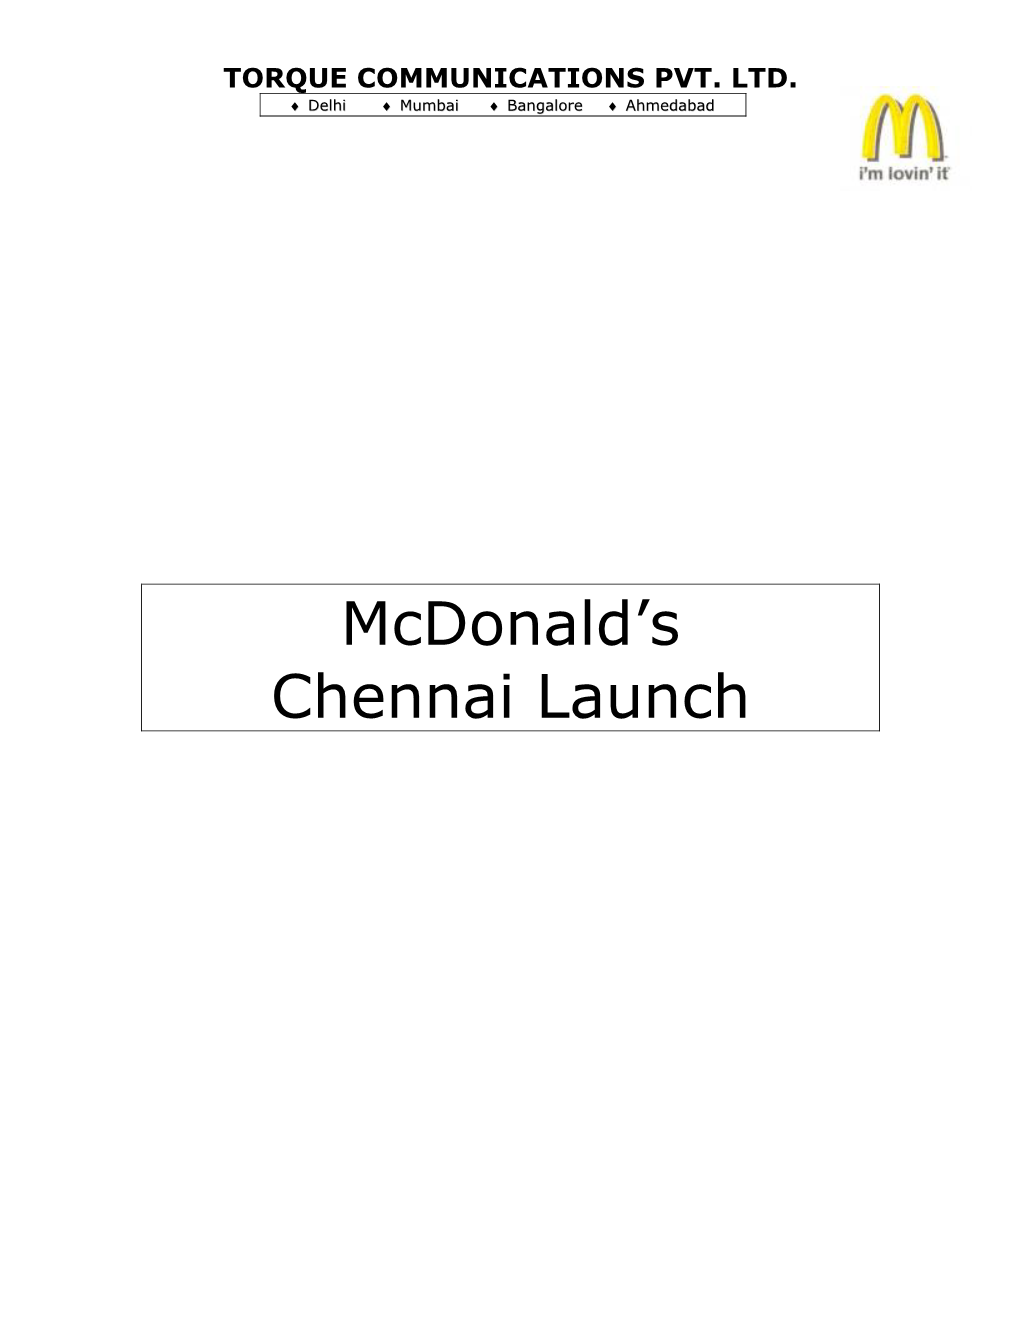 Mcdonald's Chennai Launch